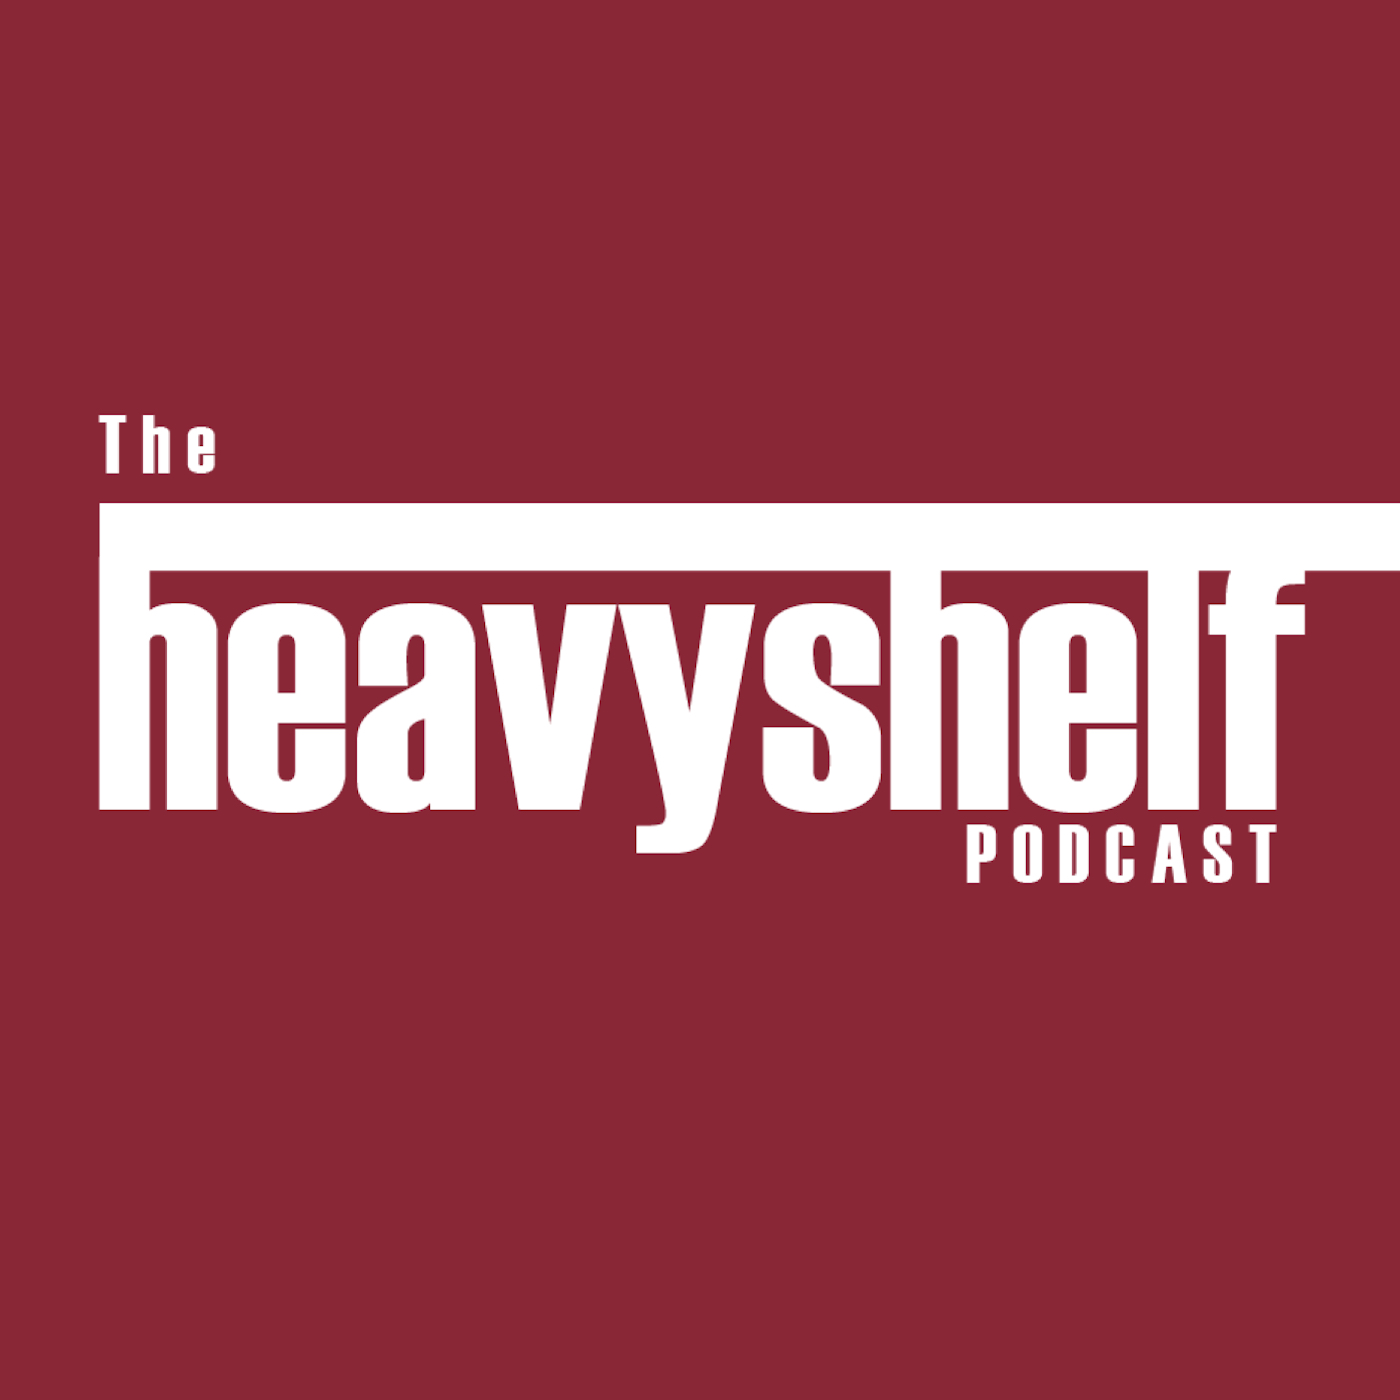 The Heavyshelf Podcast